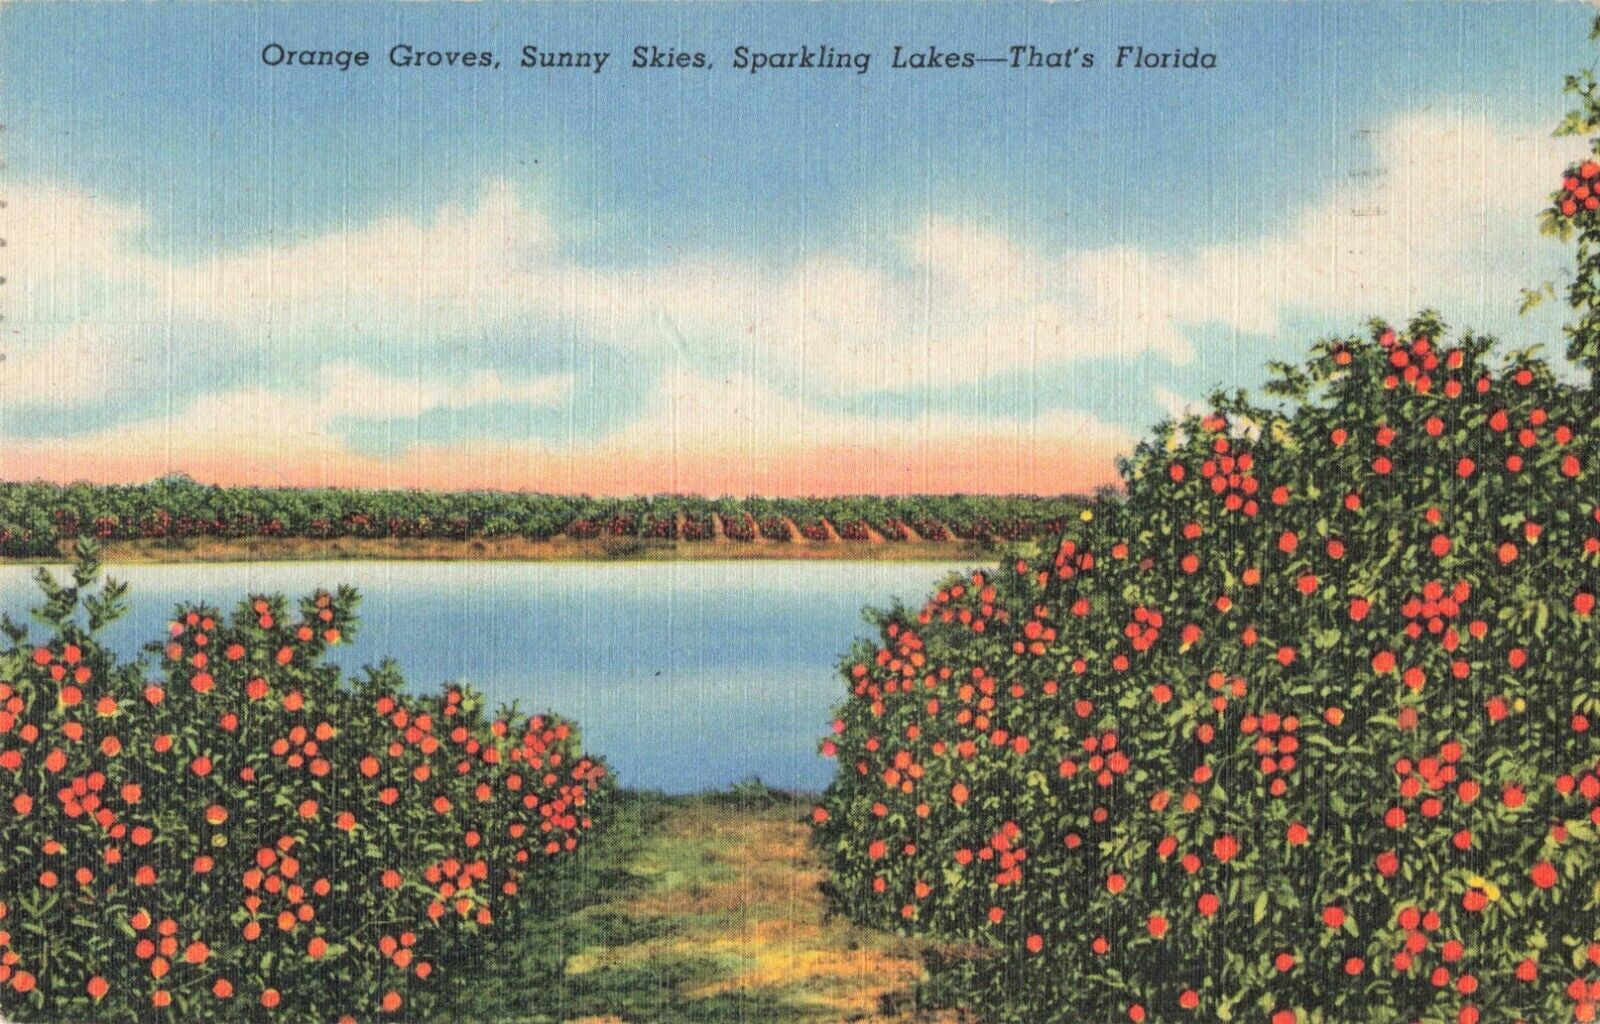 DeLand Florida, Orange Groves, Sunny Skies, Sparkling Lakes, Vintage Postcard